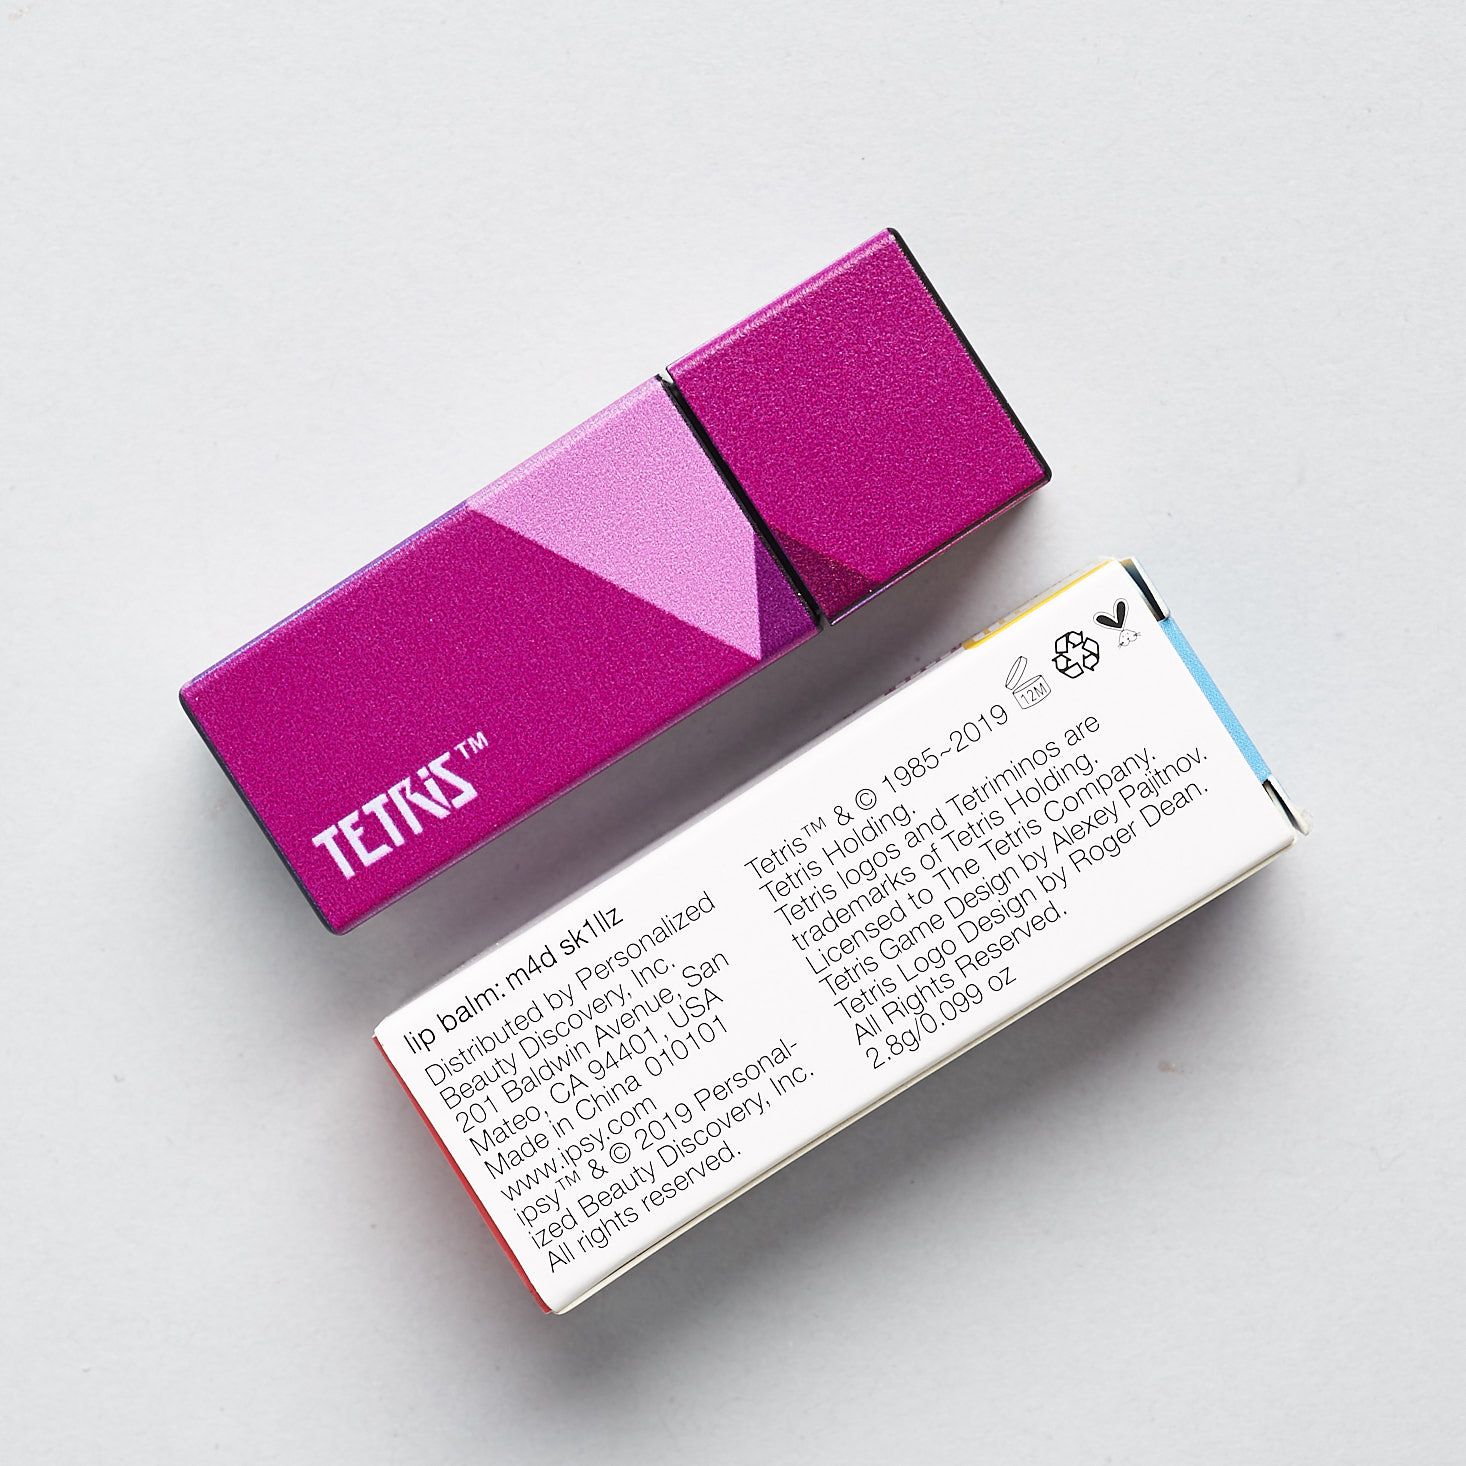 Ipsy x Tetris May 2019 makeup subscription box review lip balm l33t